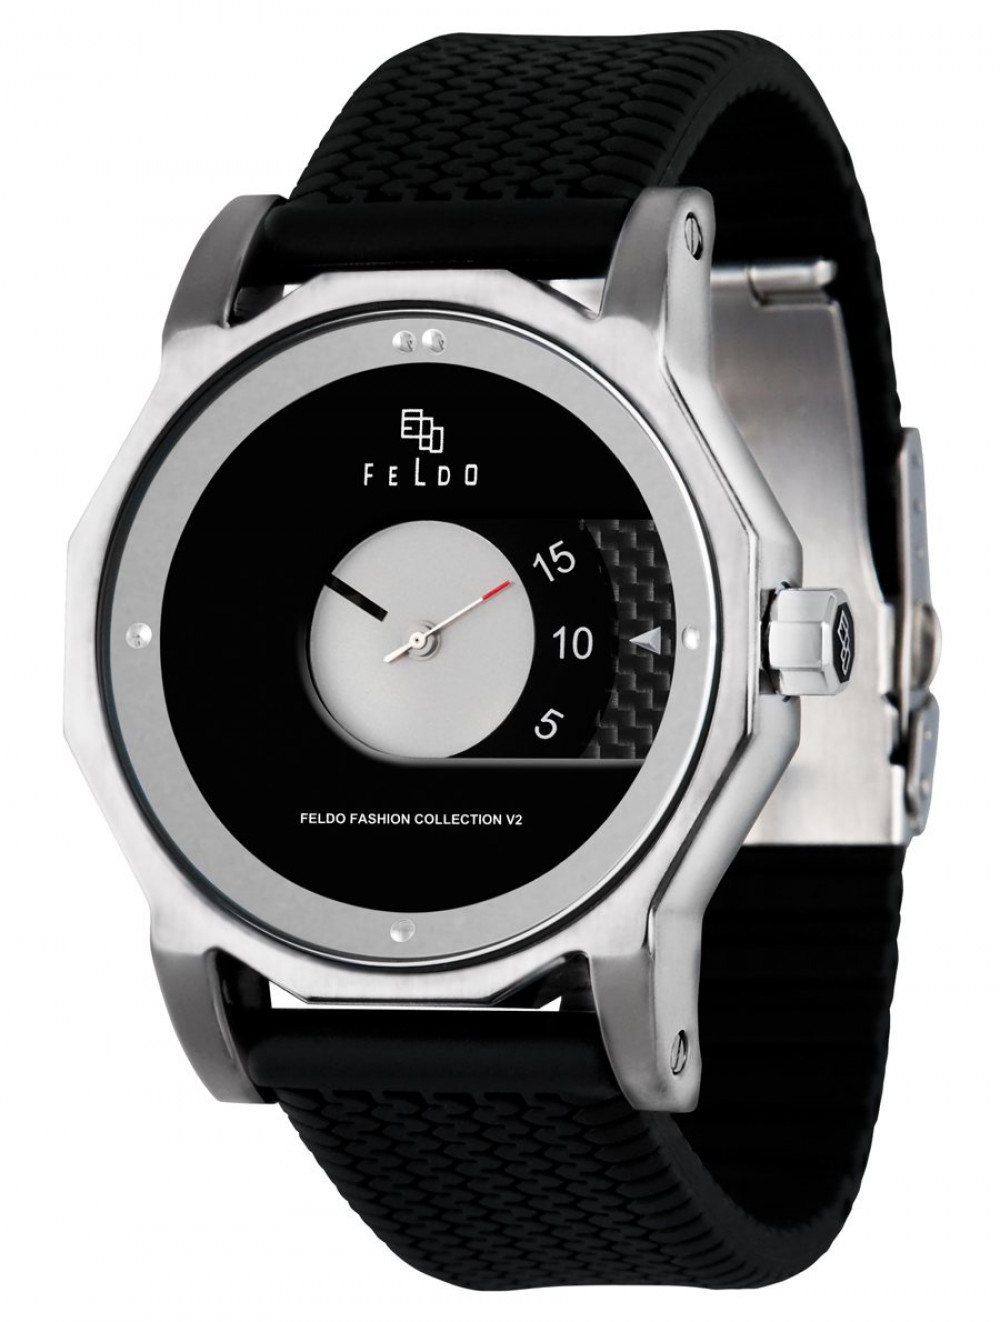 Zegarek firmy Feldo Luxury, model Fashion Line V2